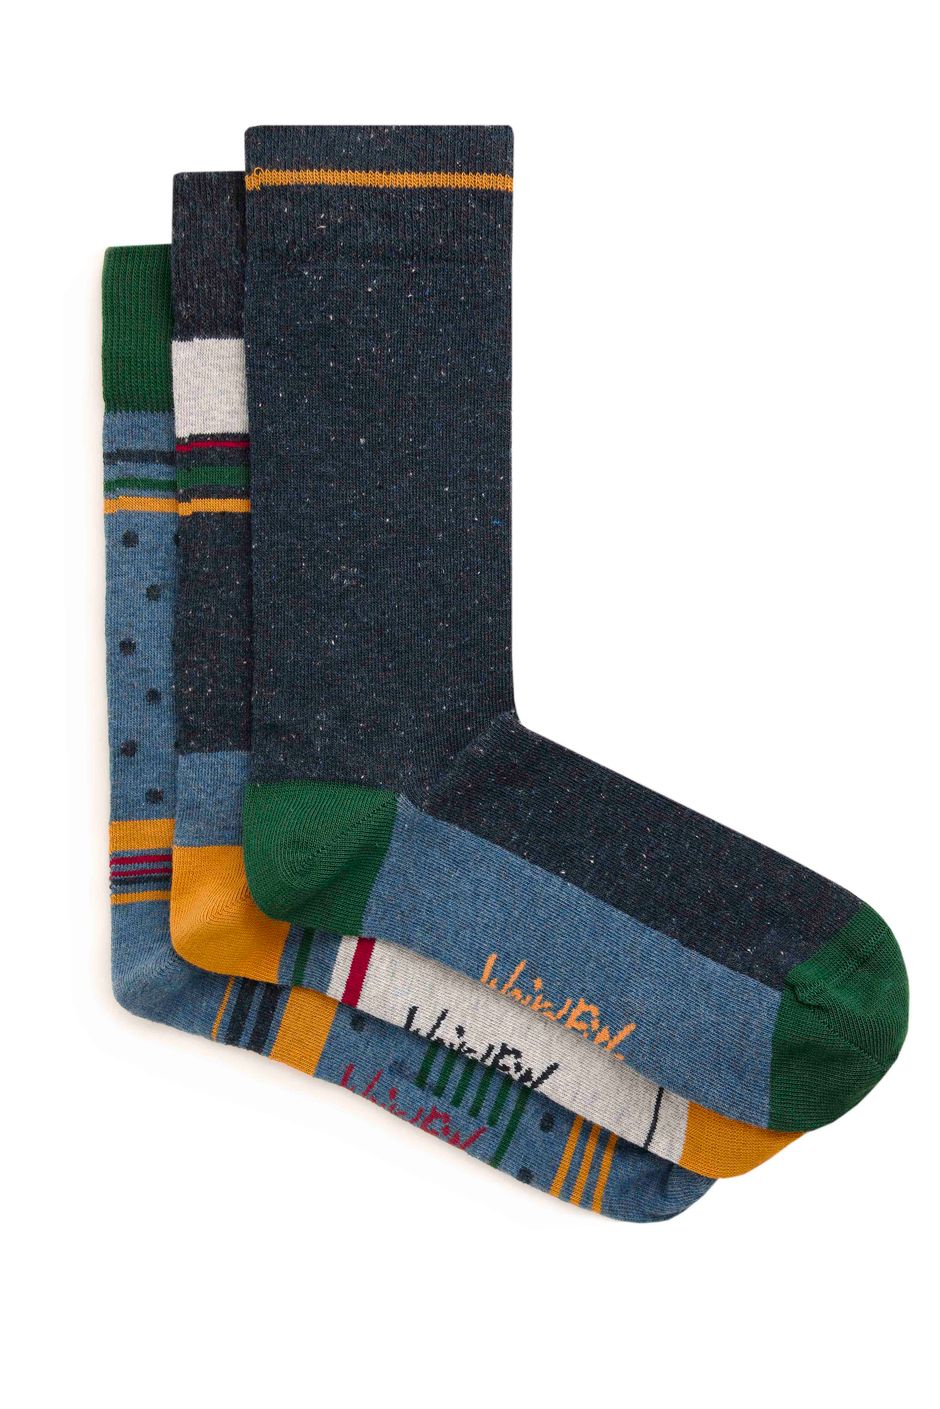 Wyatt Eco Stripe Socks Multi Pack Denim